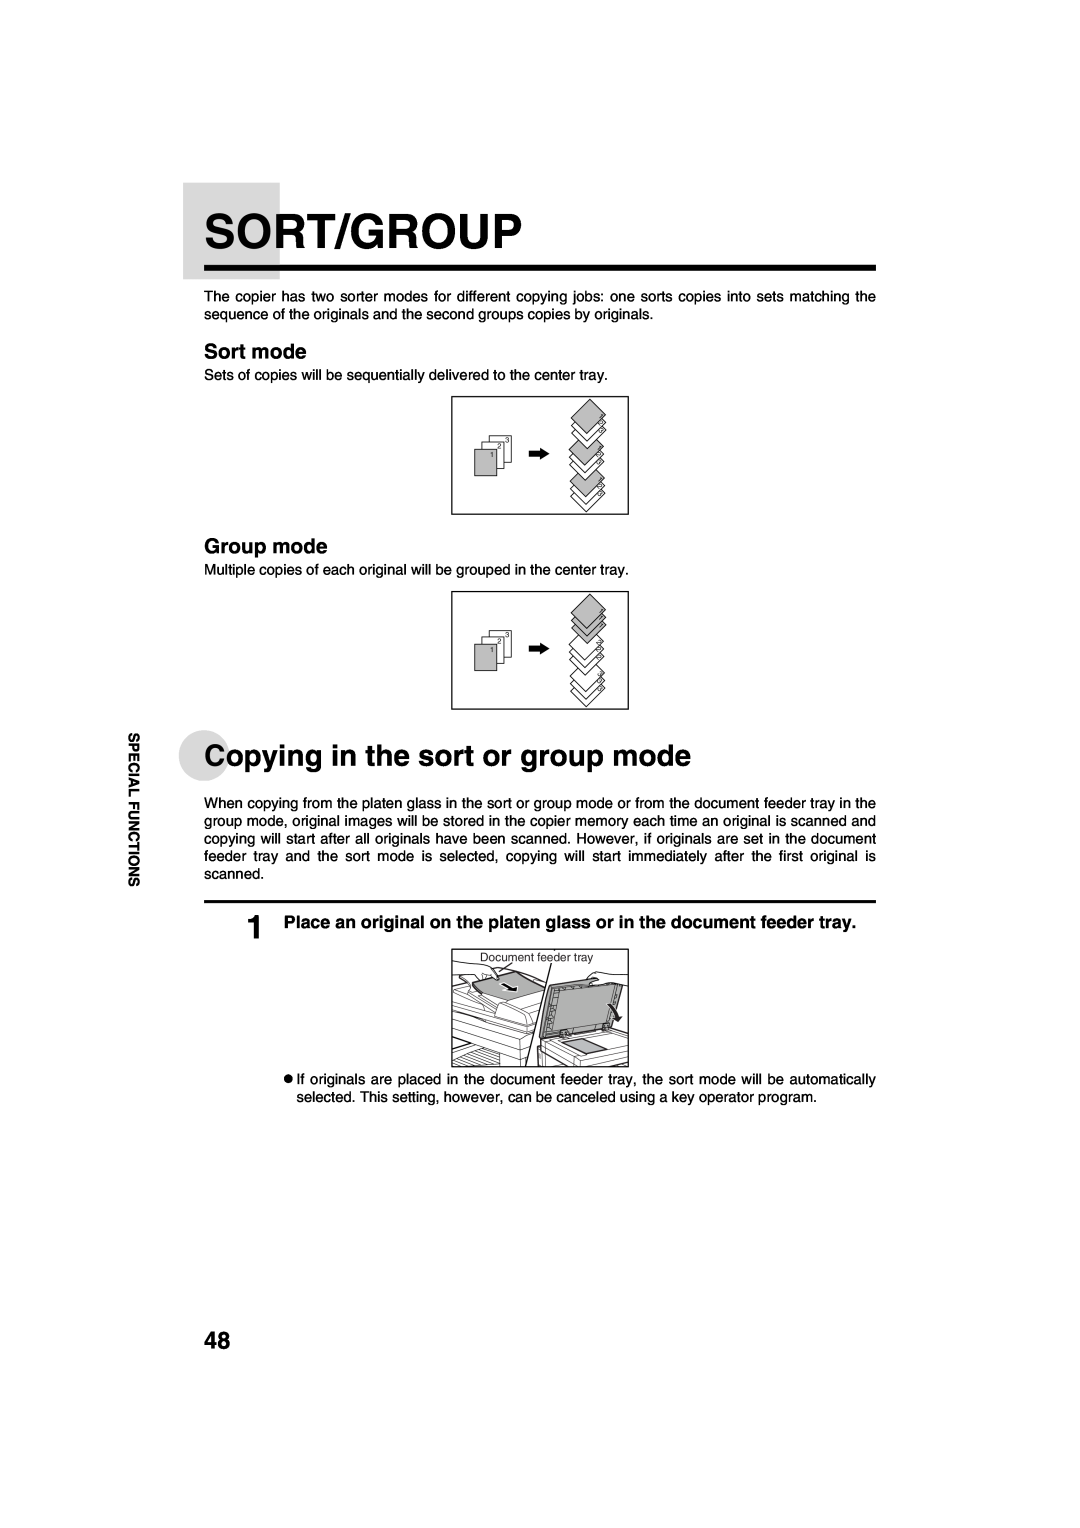 Sharp AR-M208 operation manual Sort/Group, Copying in the sort or group mode, Sort mode, Group mode 